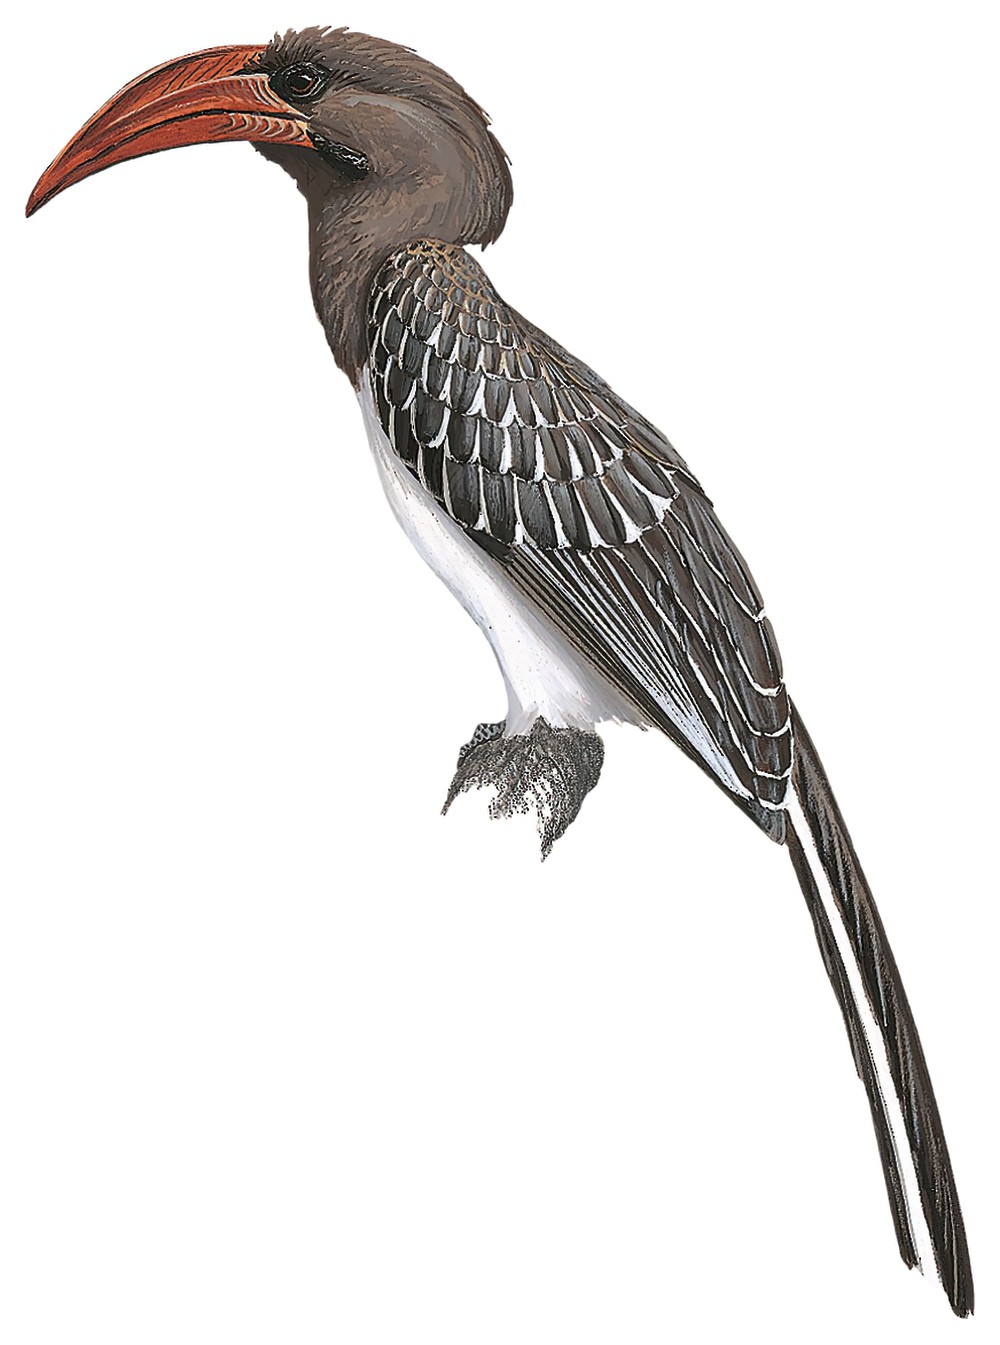 Hemprich\'s Hornbill / Lophoceros hemprichii